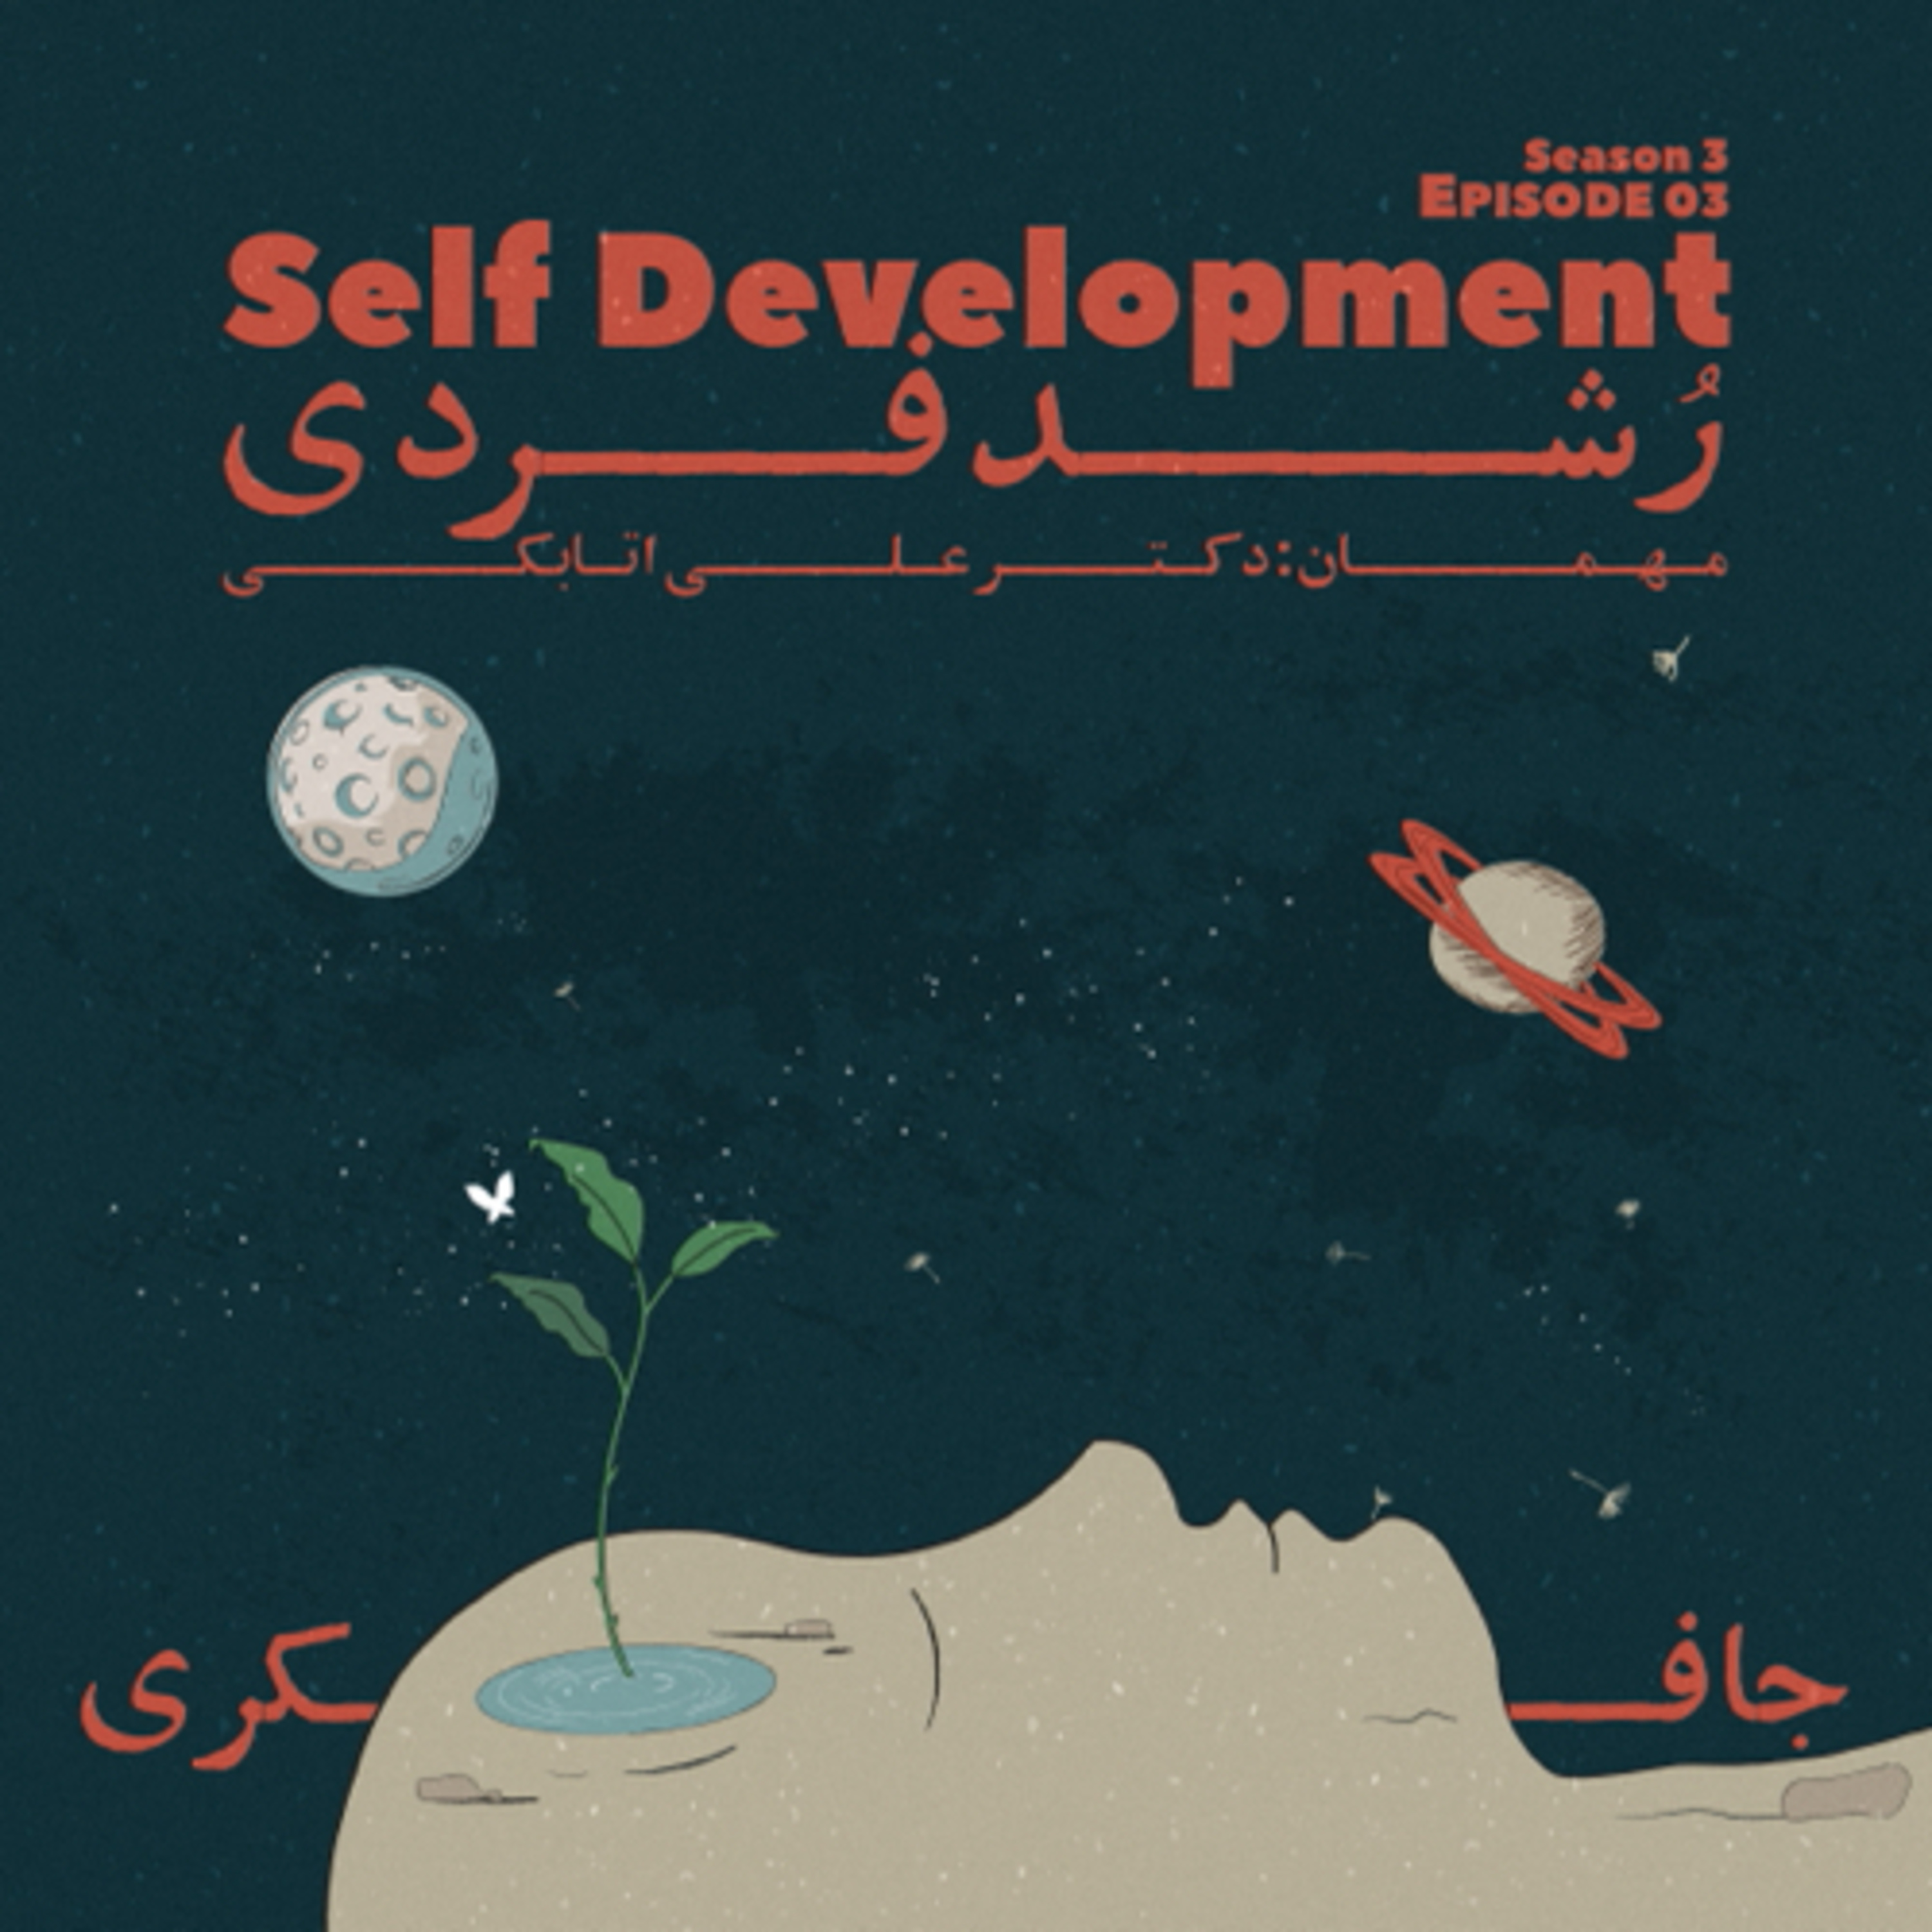 Episode 03 - Self Development (رشد فردی)